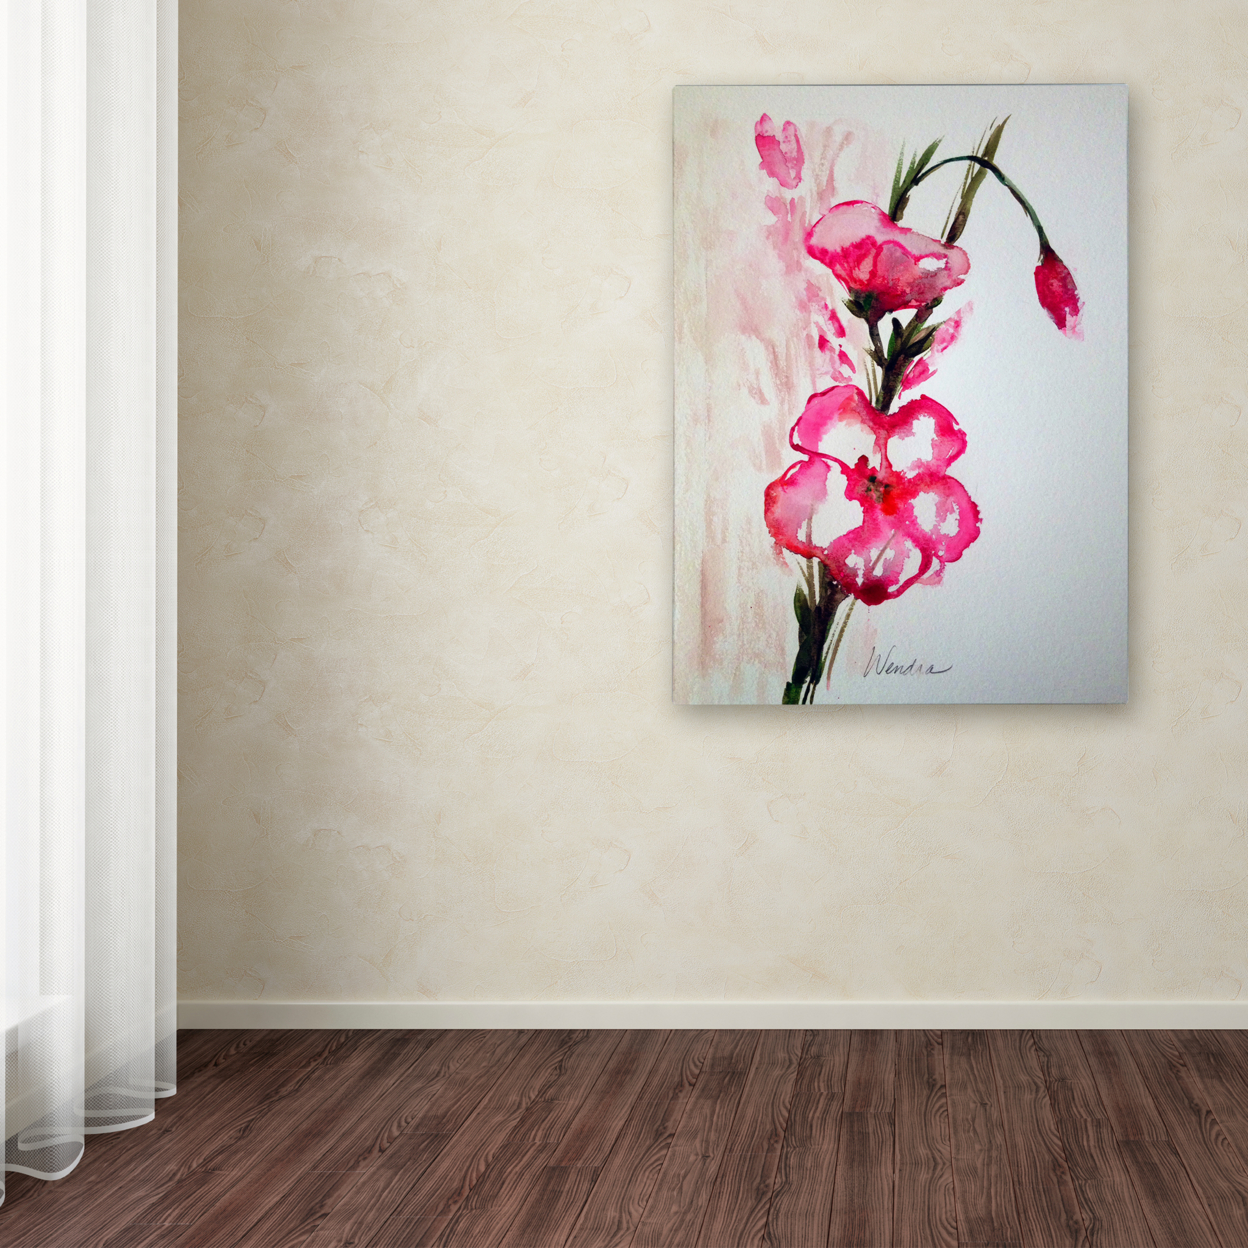 Wendra 'New Bloom' Canvas Art 18 X 24